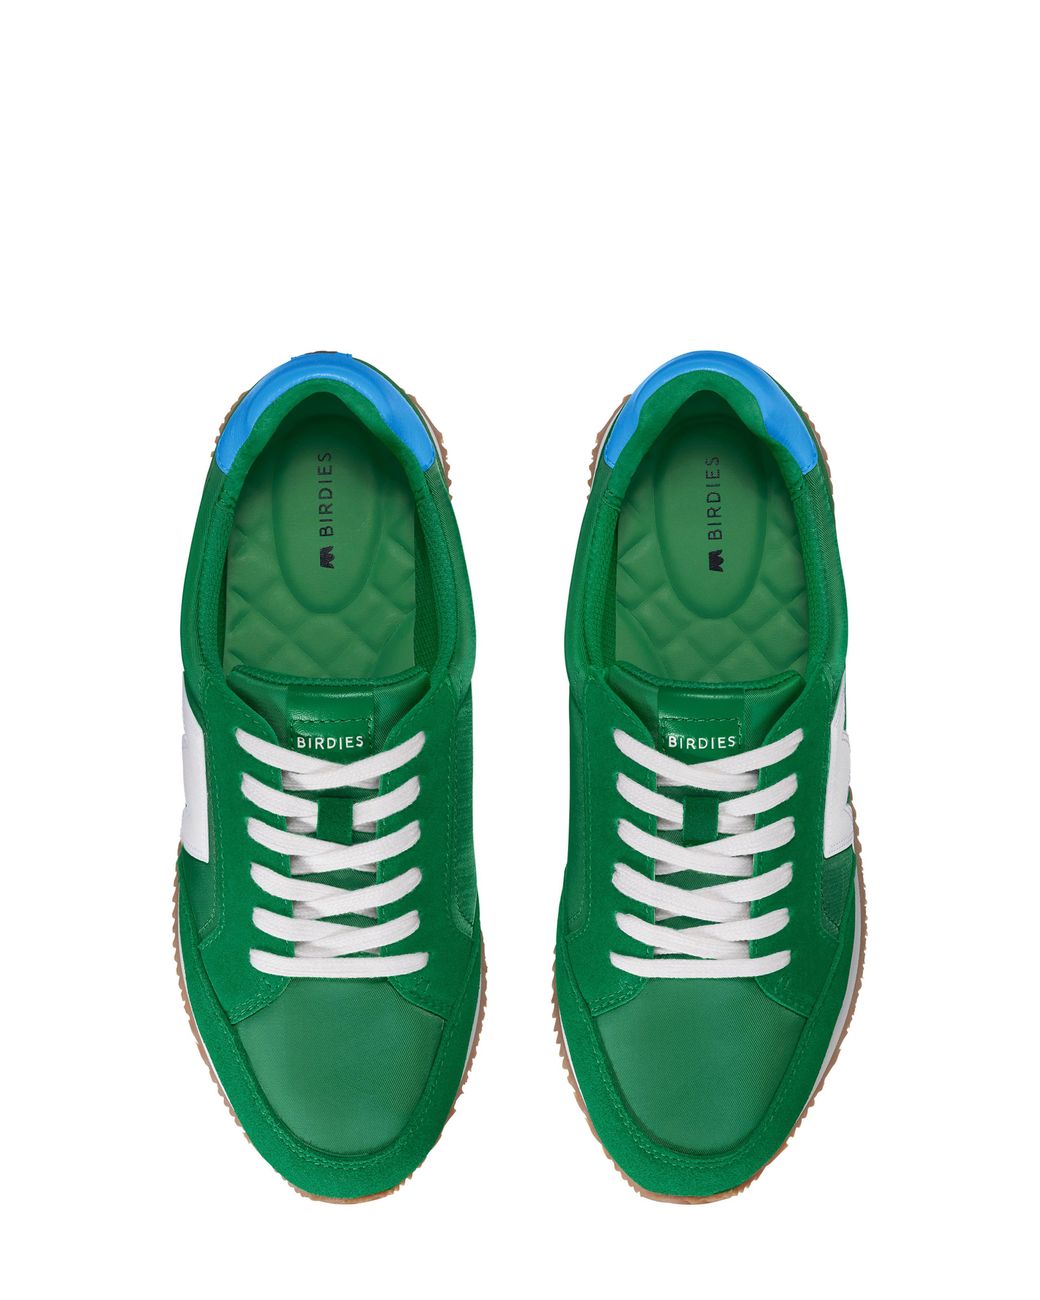 Birdies Roadrunner Sneaker in Green | Lyst